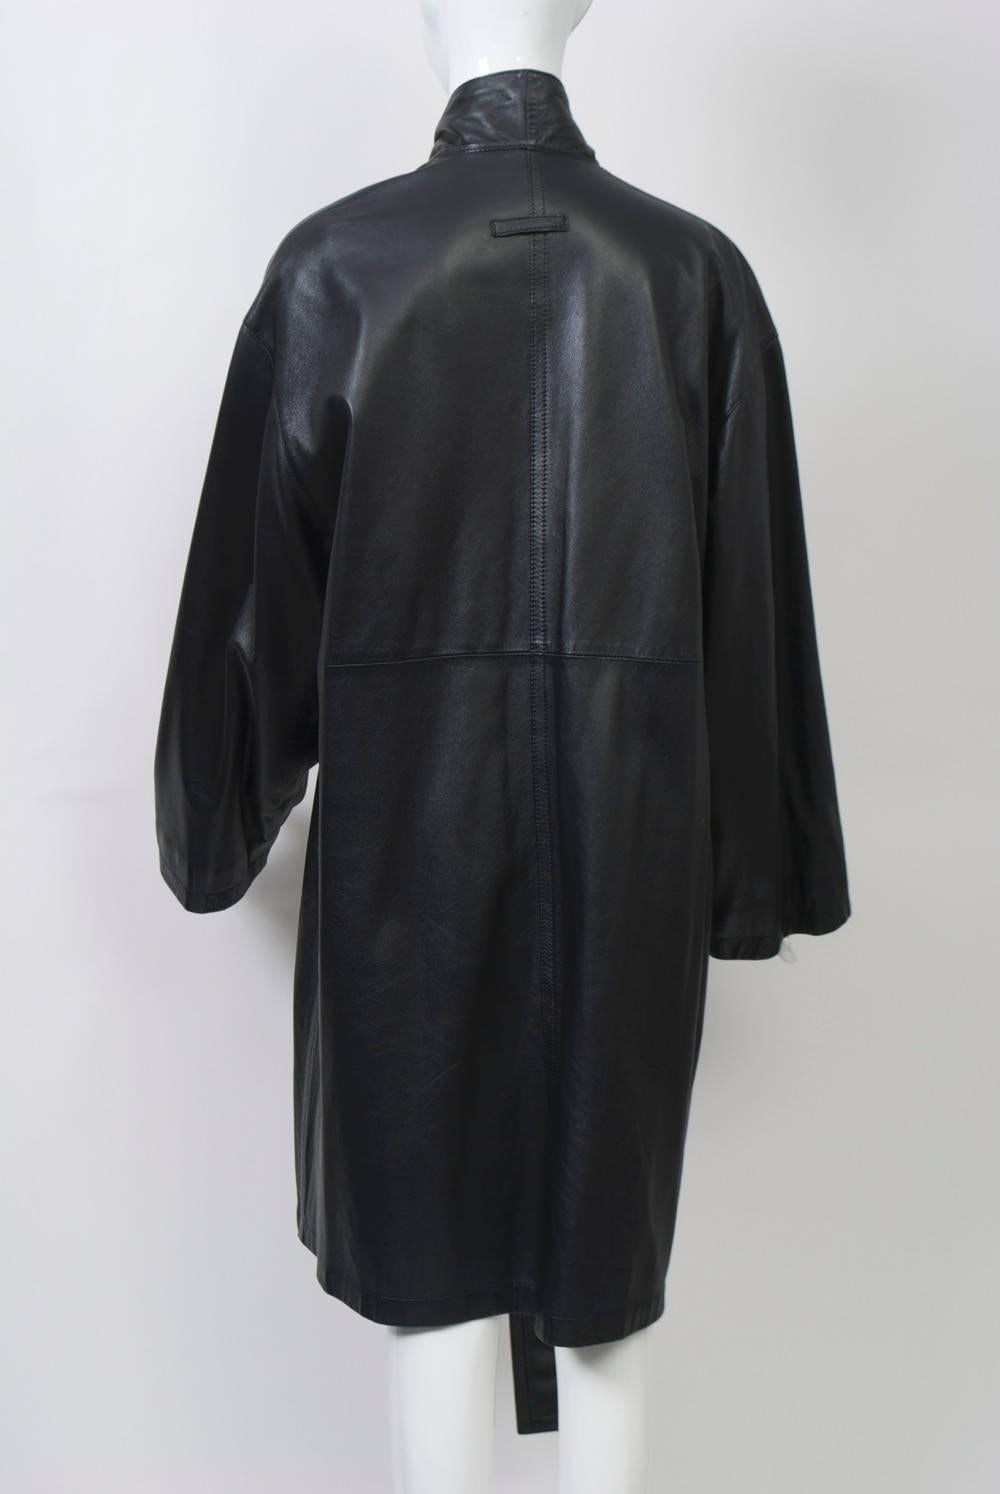 Gaultier Black Leather Coat 1